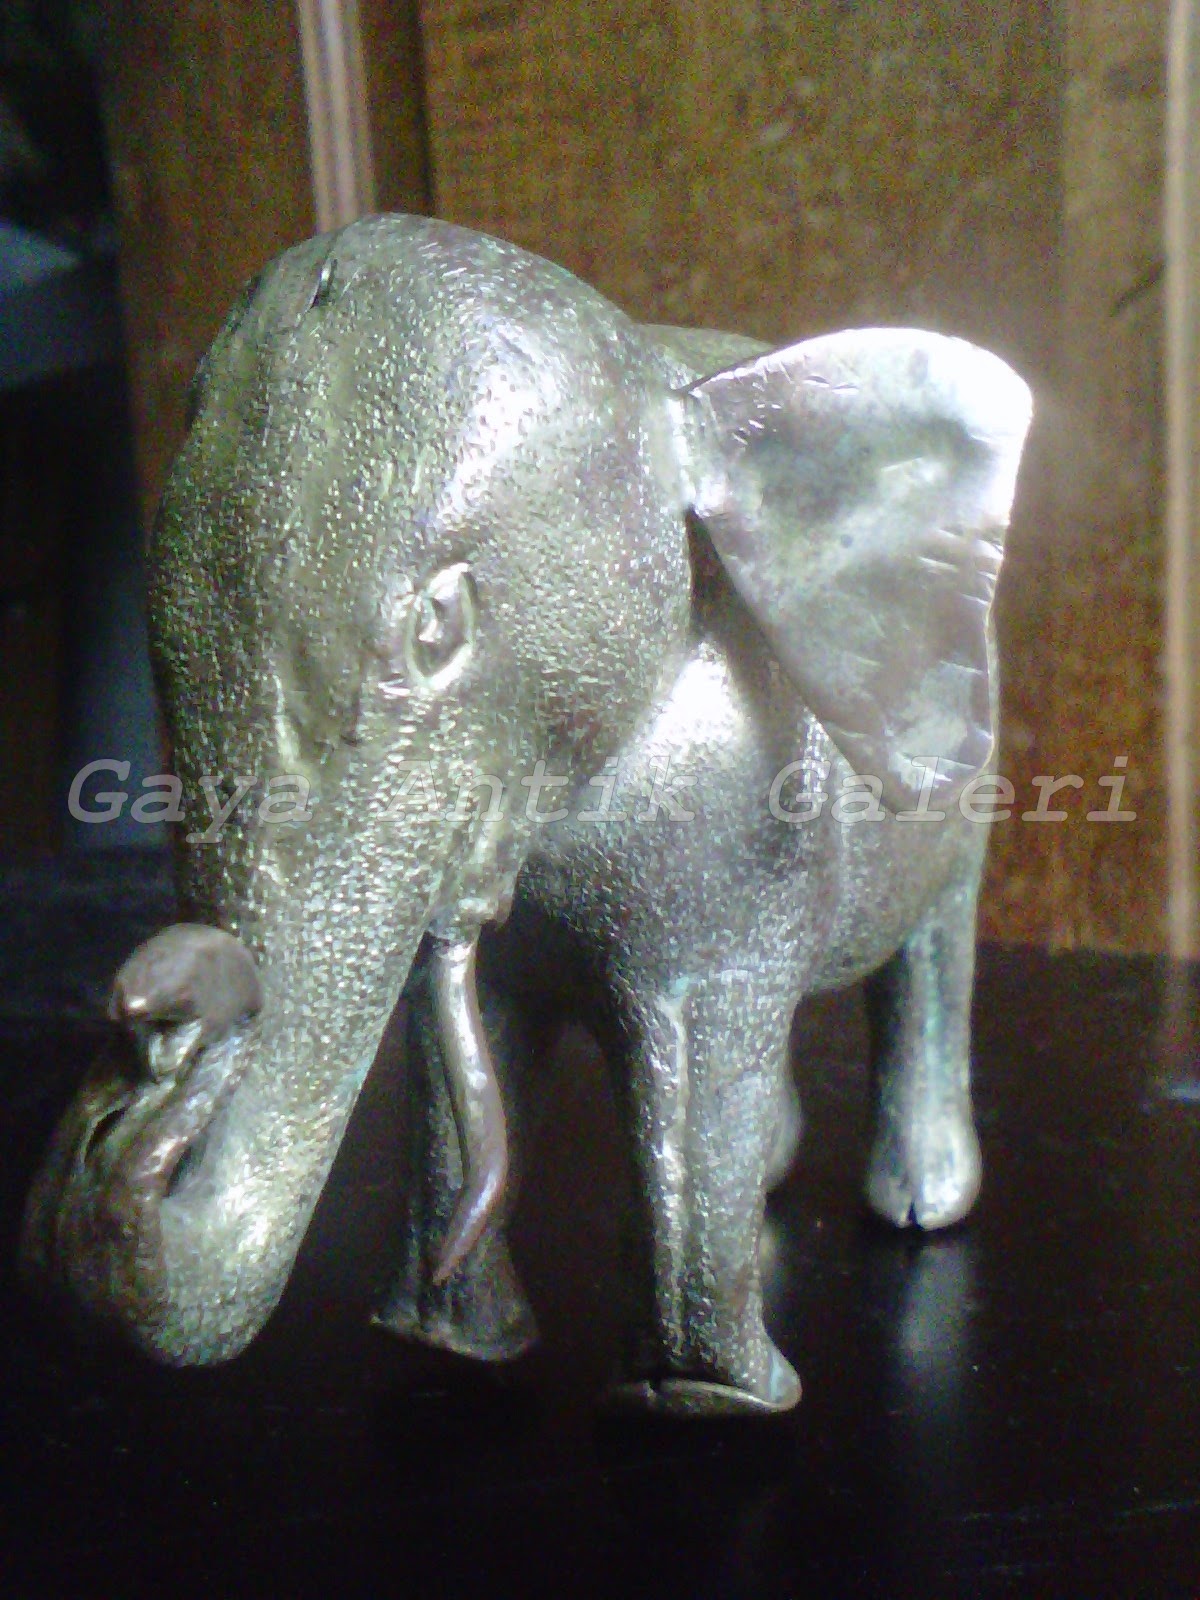 Gaya Antik Galeri Gaya Antique Gallery Patung Gajah Antik Bahan